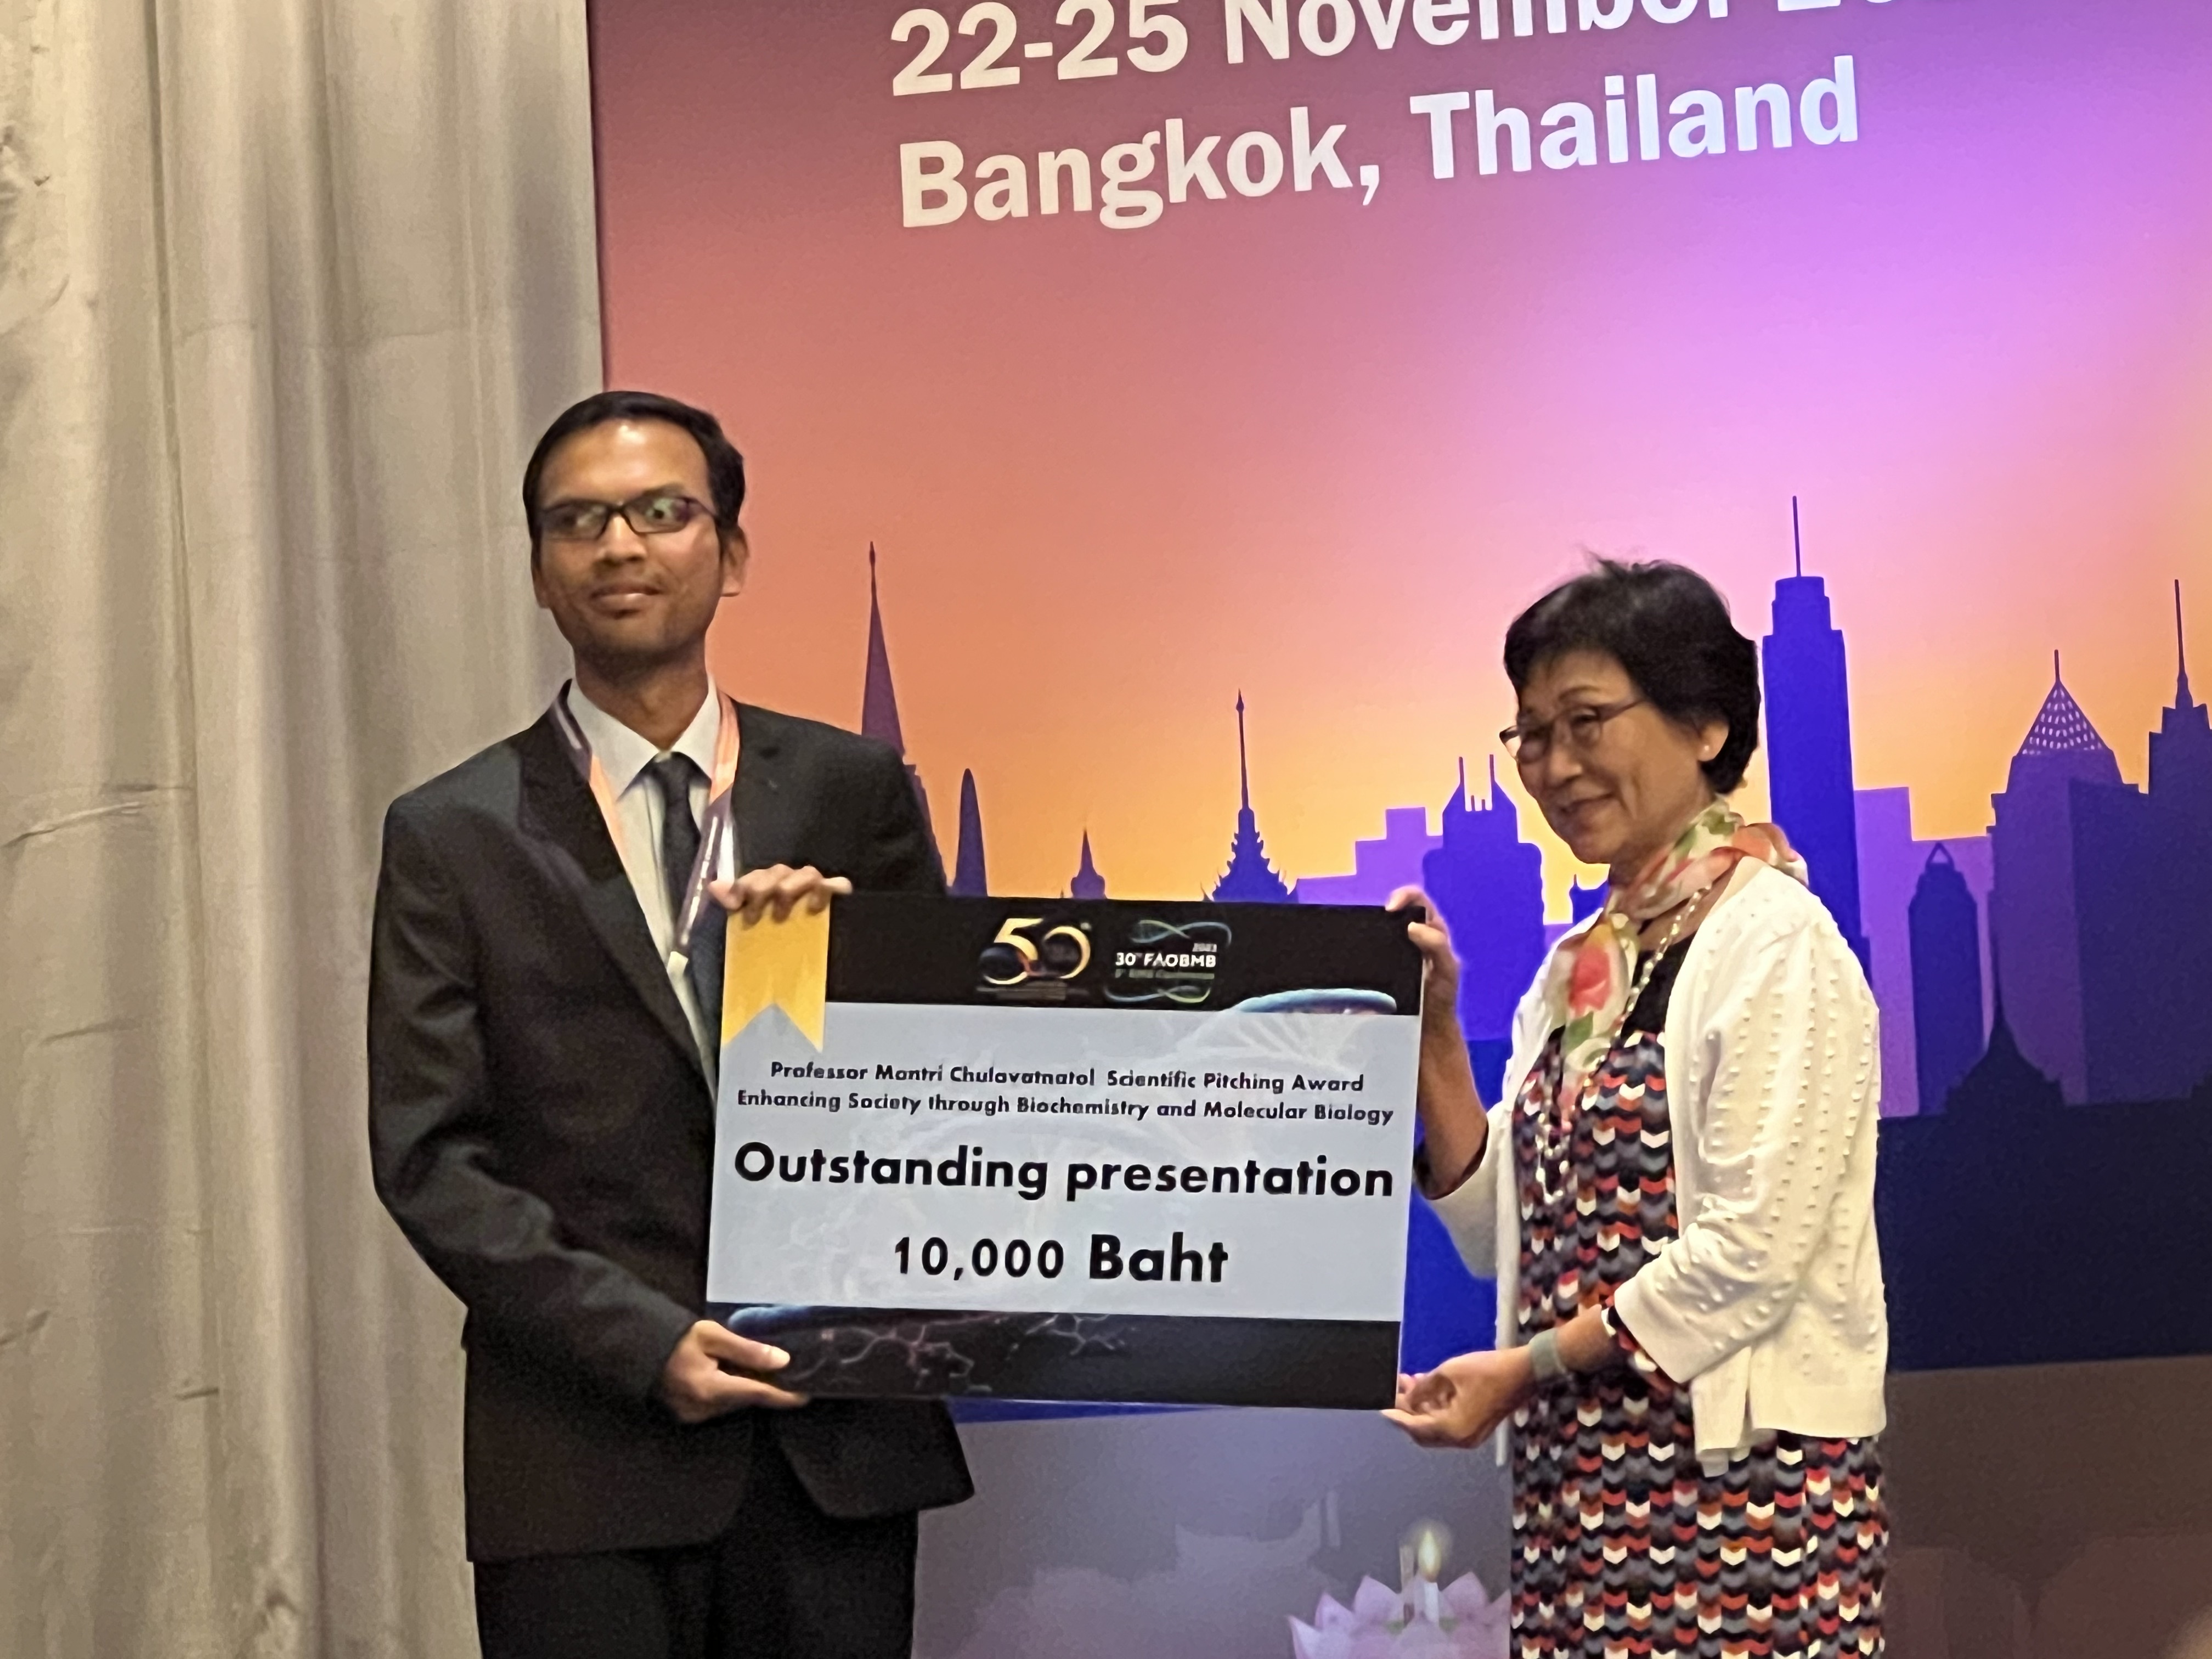 Muthuraman Krishna Raja from Professor Park’s Laboratory Wins Top Award at International Conference in Thailand